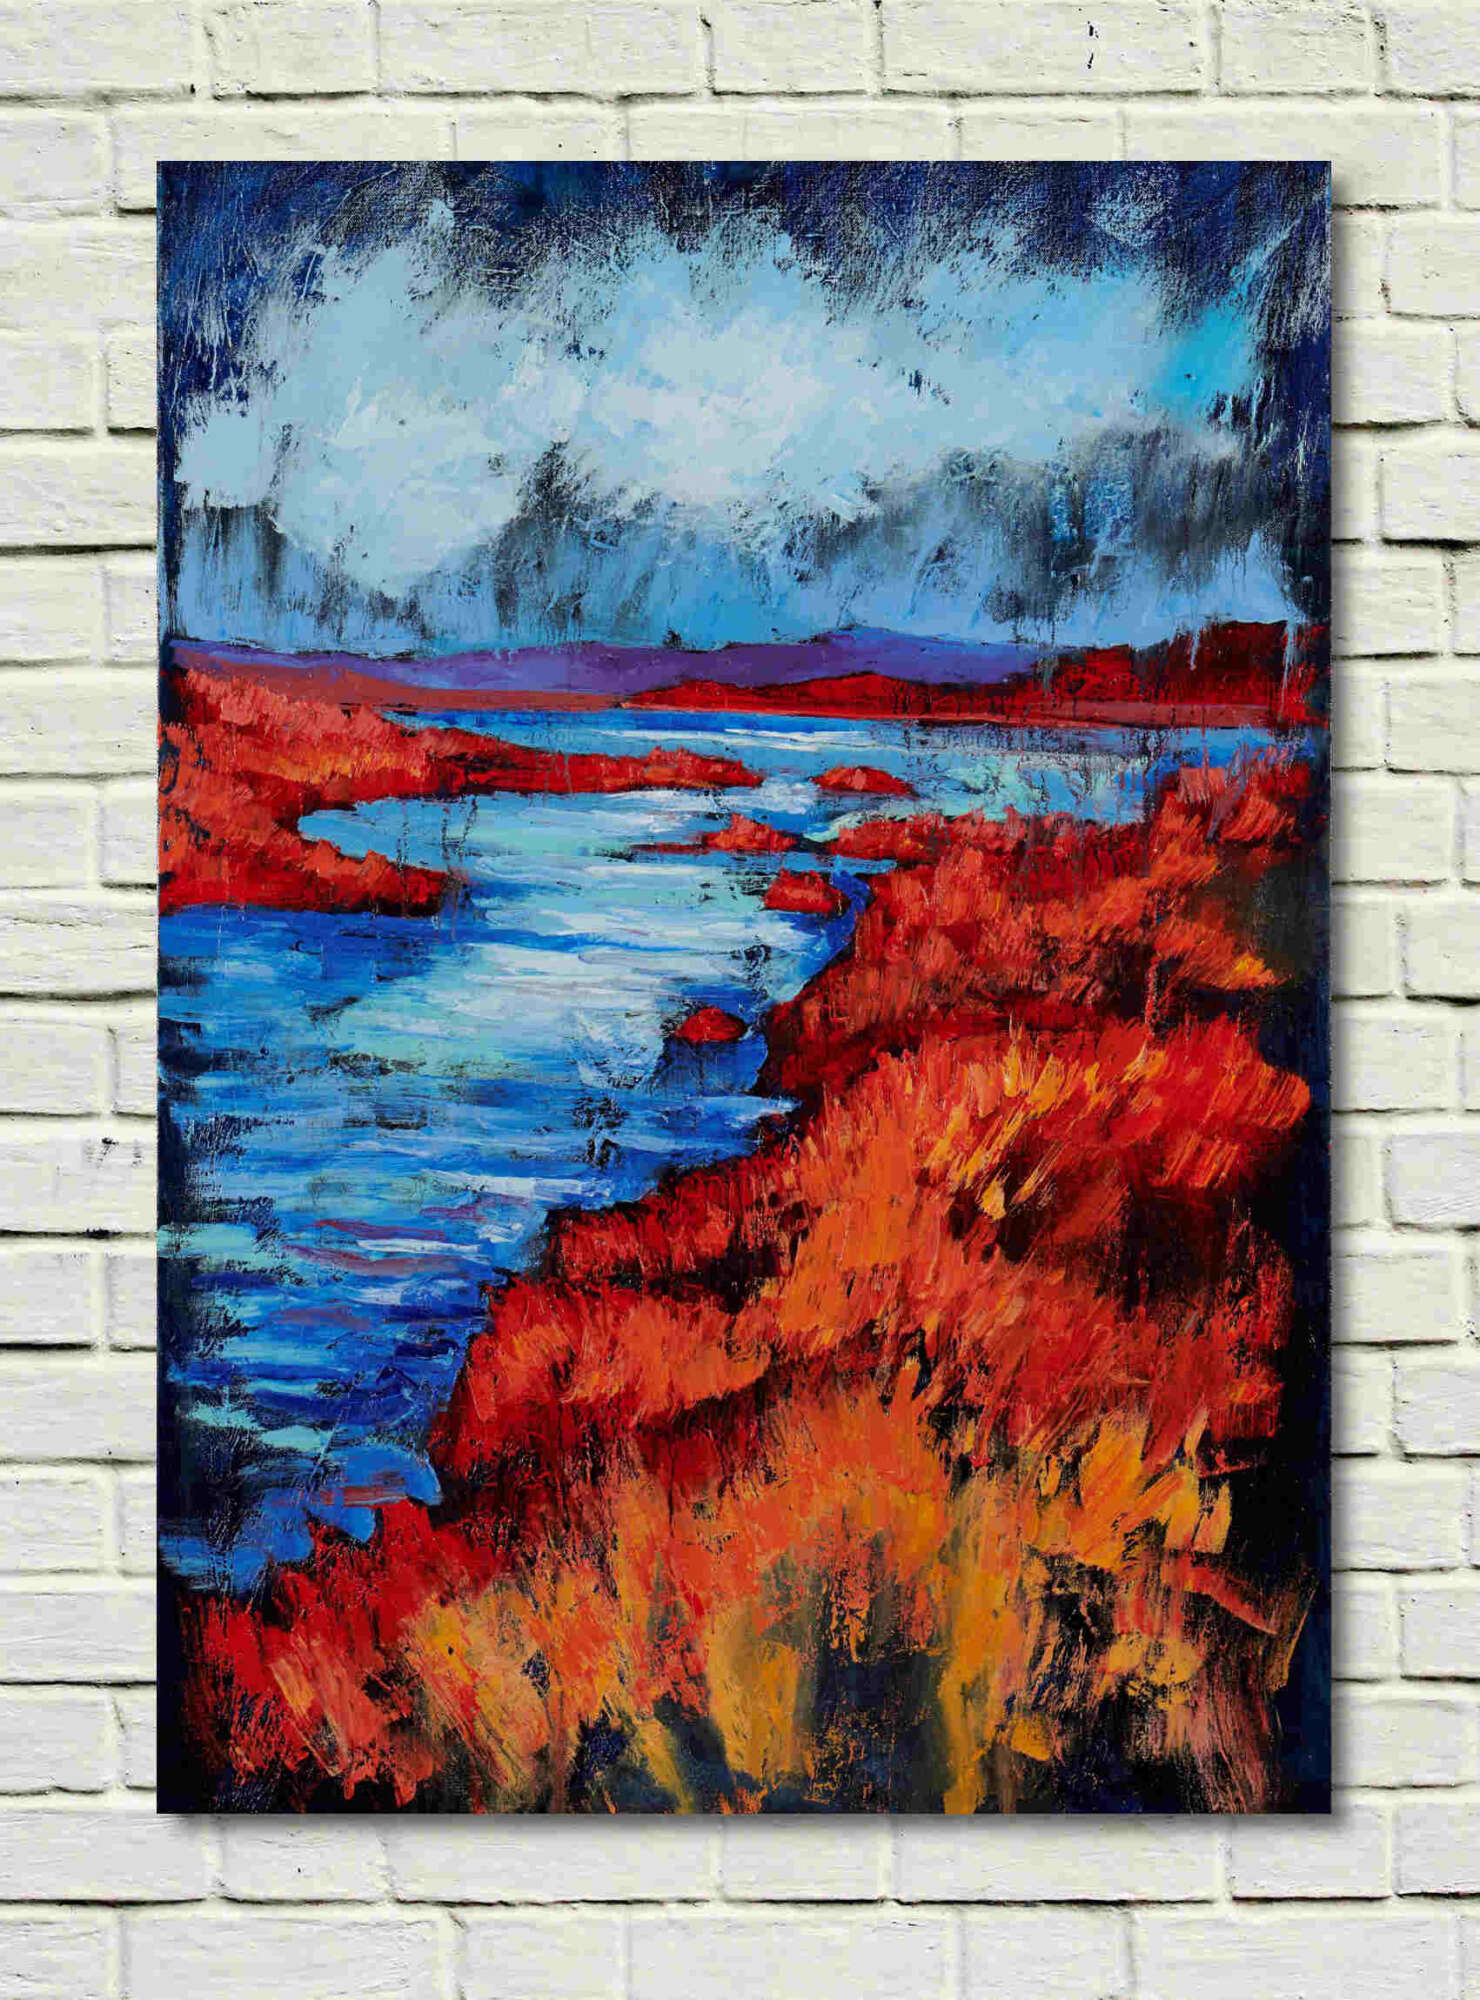 artist rod coyne's landscape "Ardcost Estuary" is shown here unframed on a white wall.